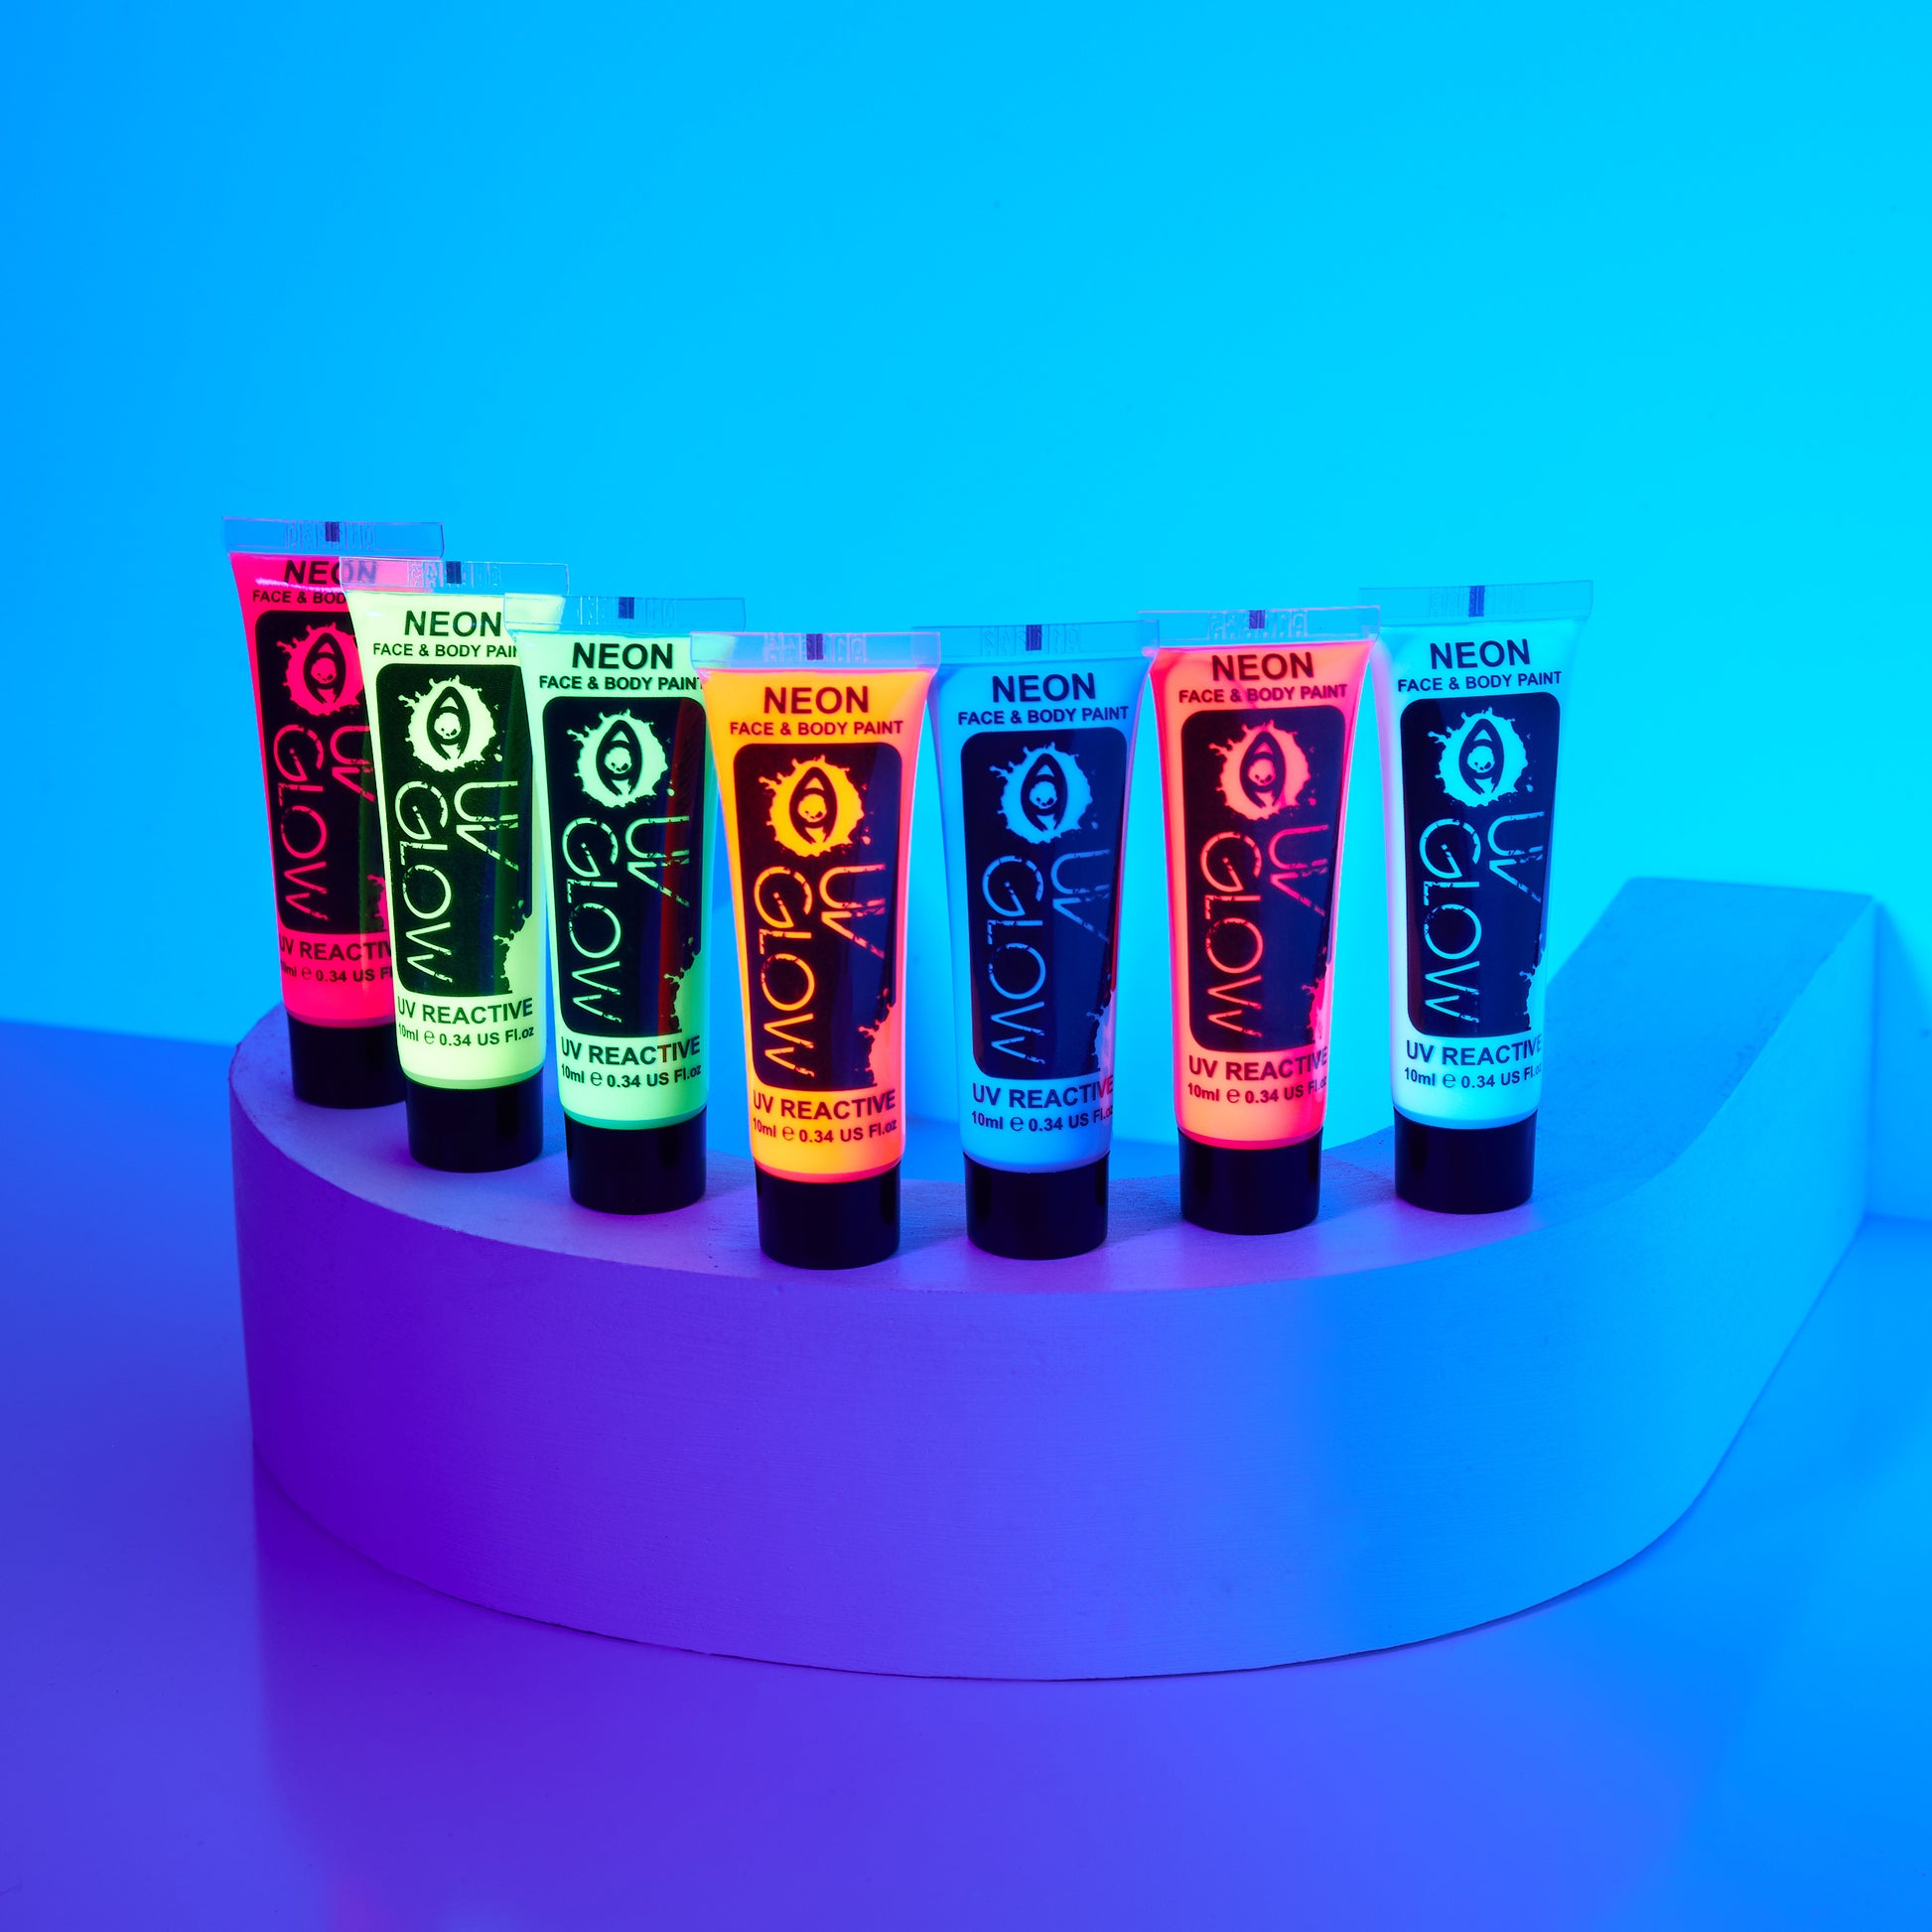 4 X Neon UV Glow Face Body Paint 